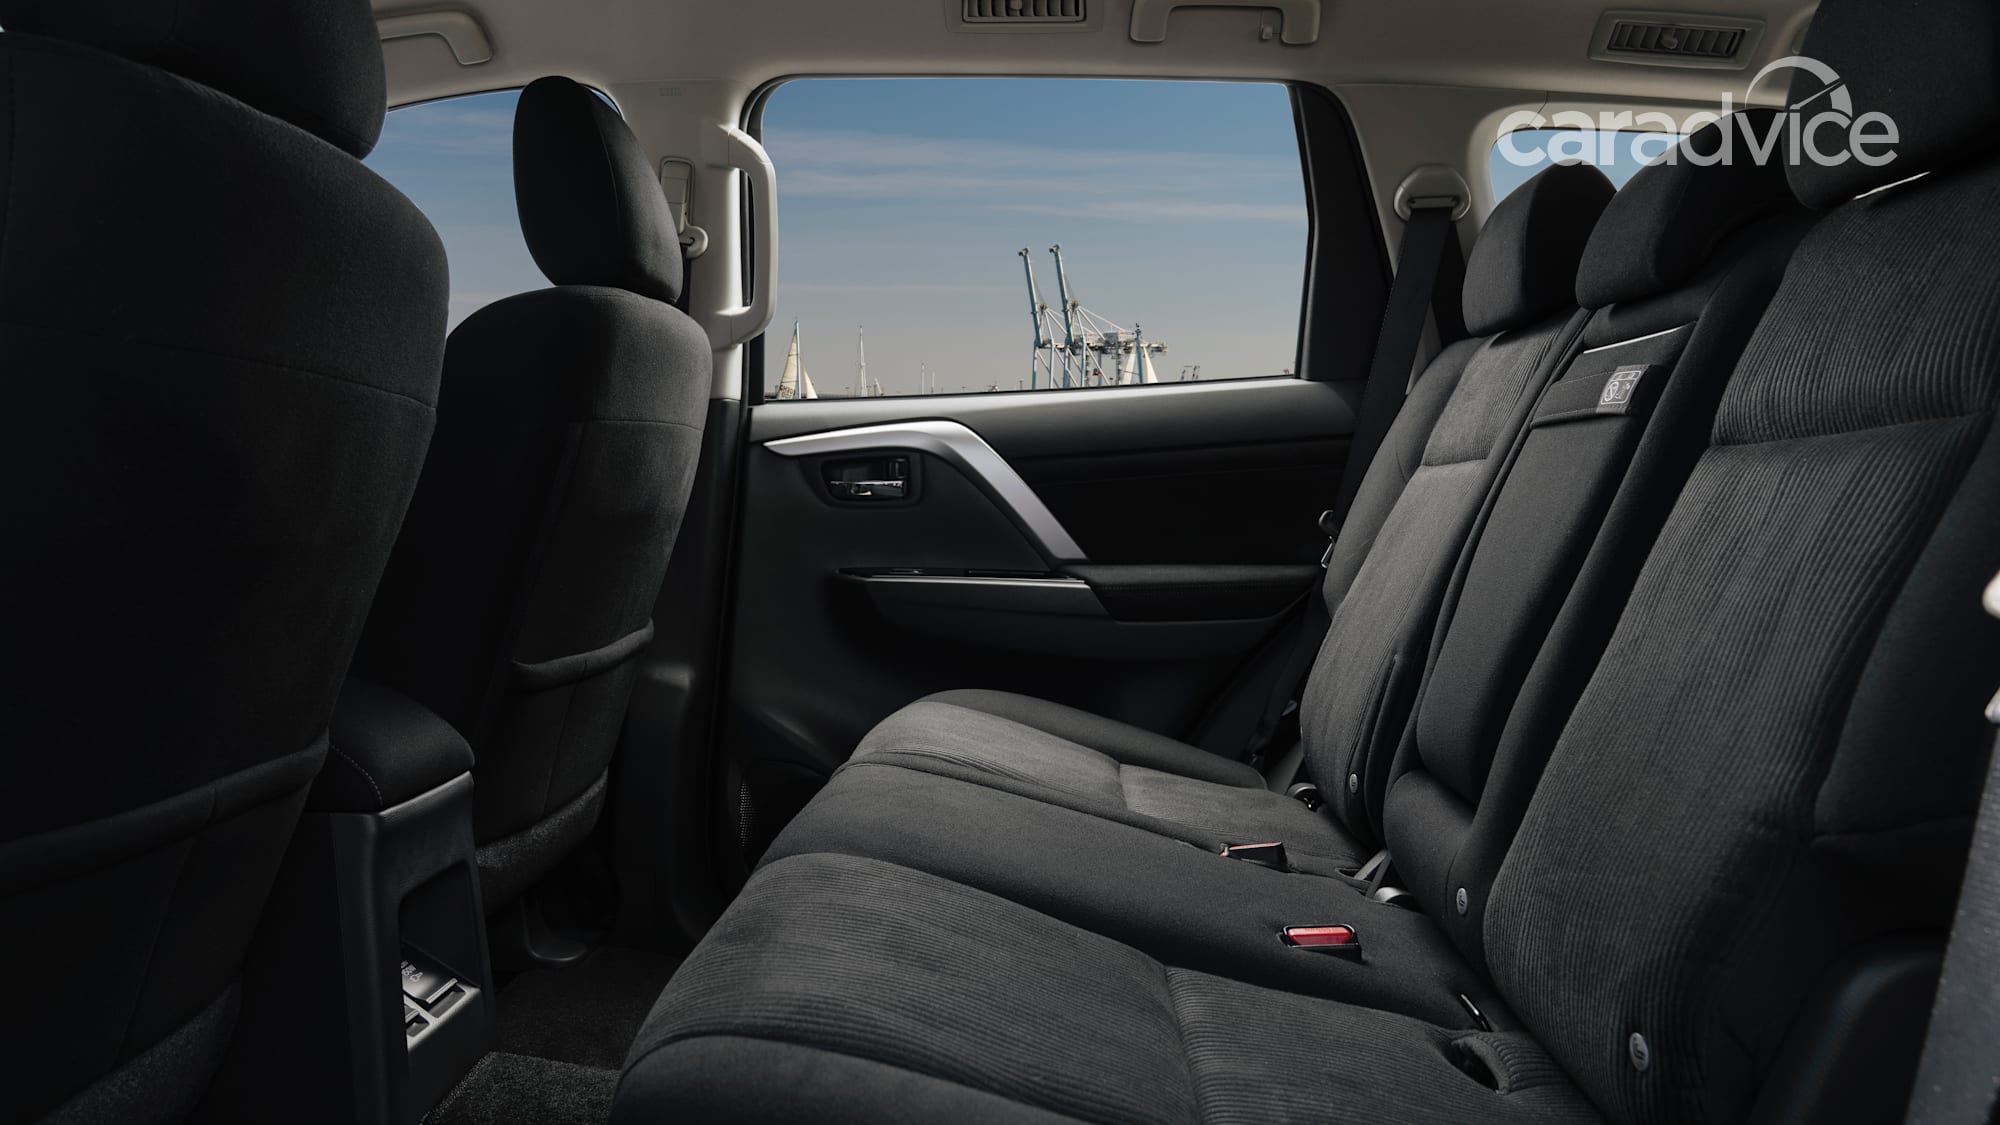 2020 Mitsubishi Pajero Sport pricing and specs | CarAdvice